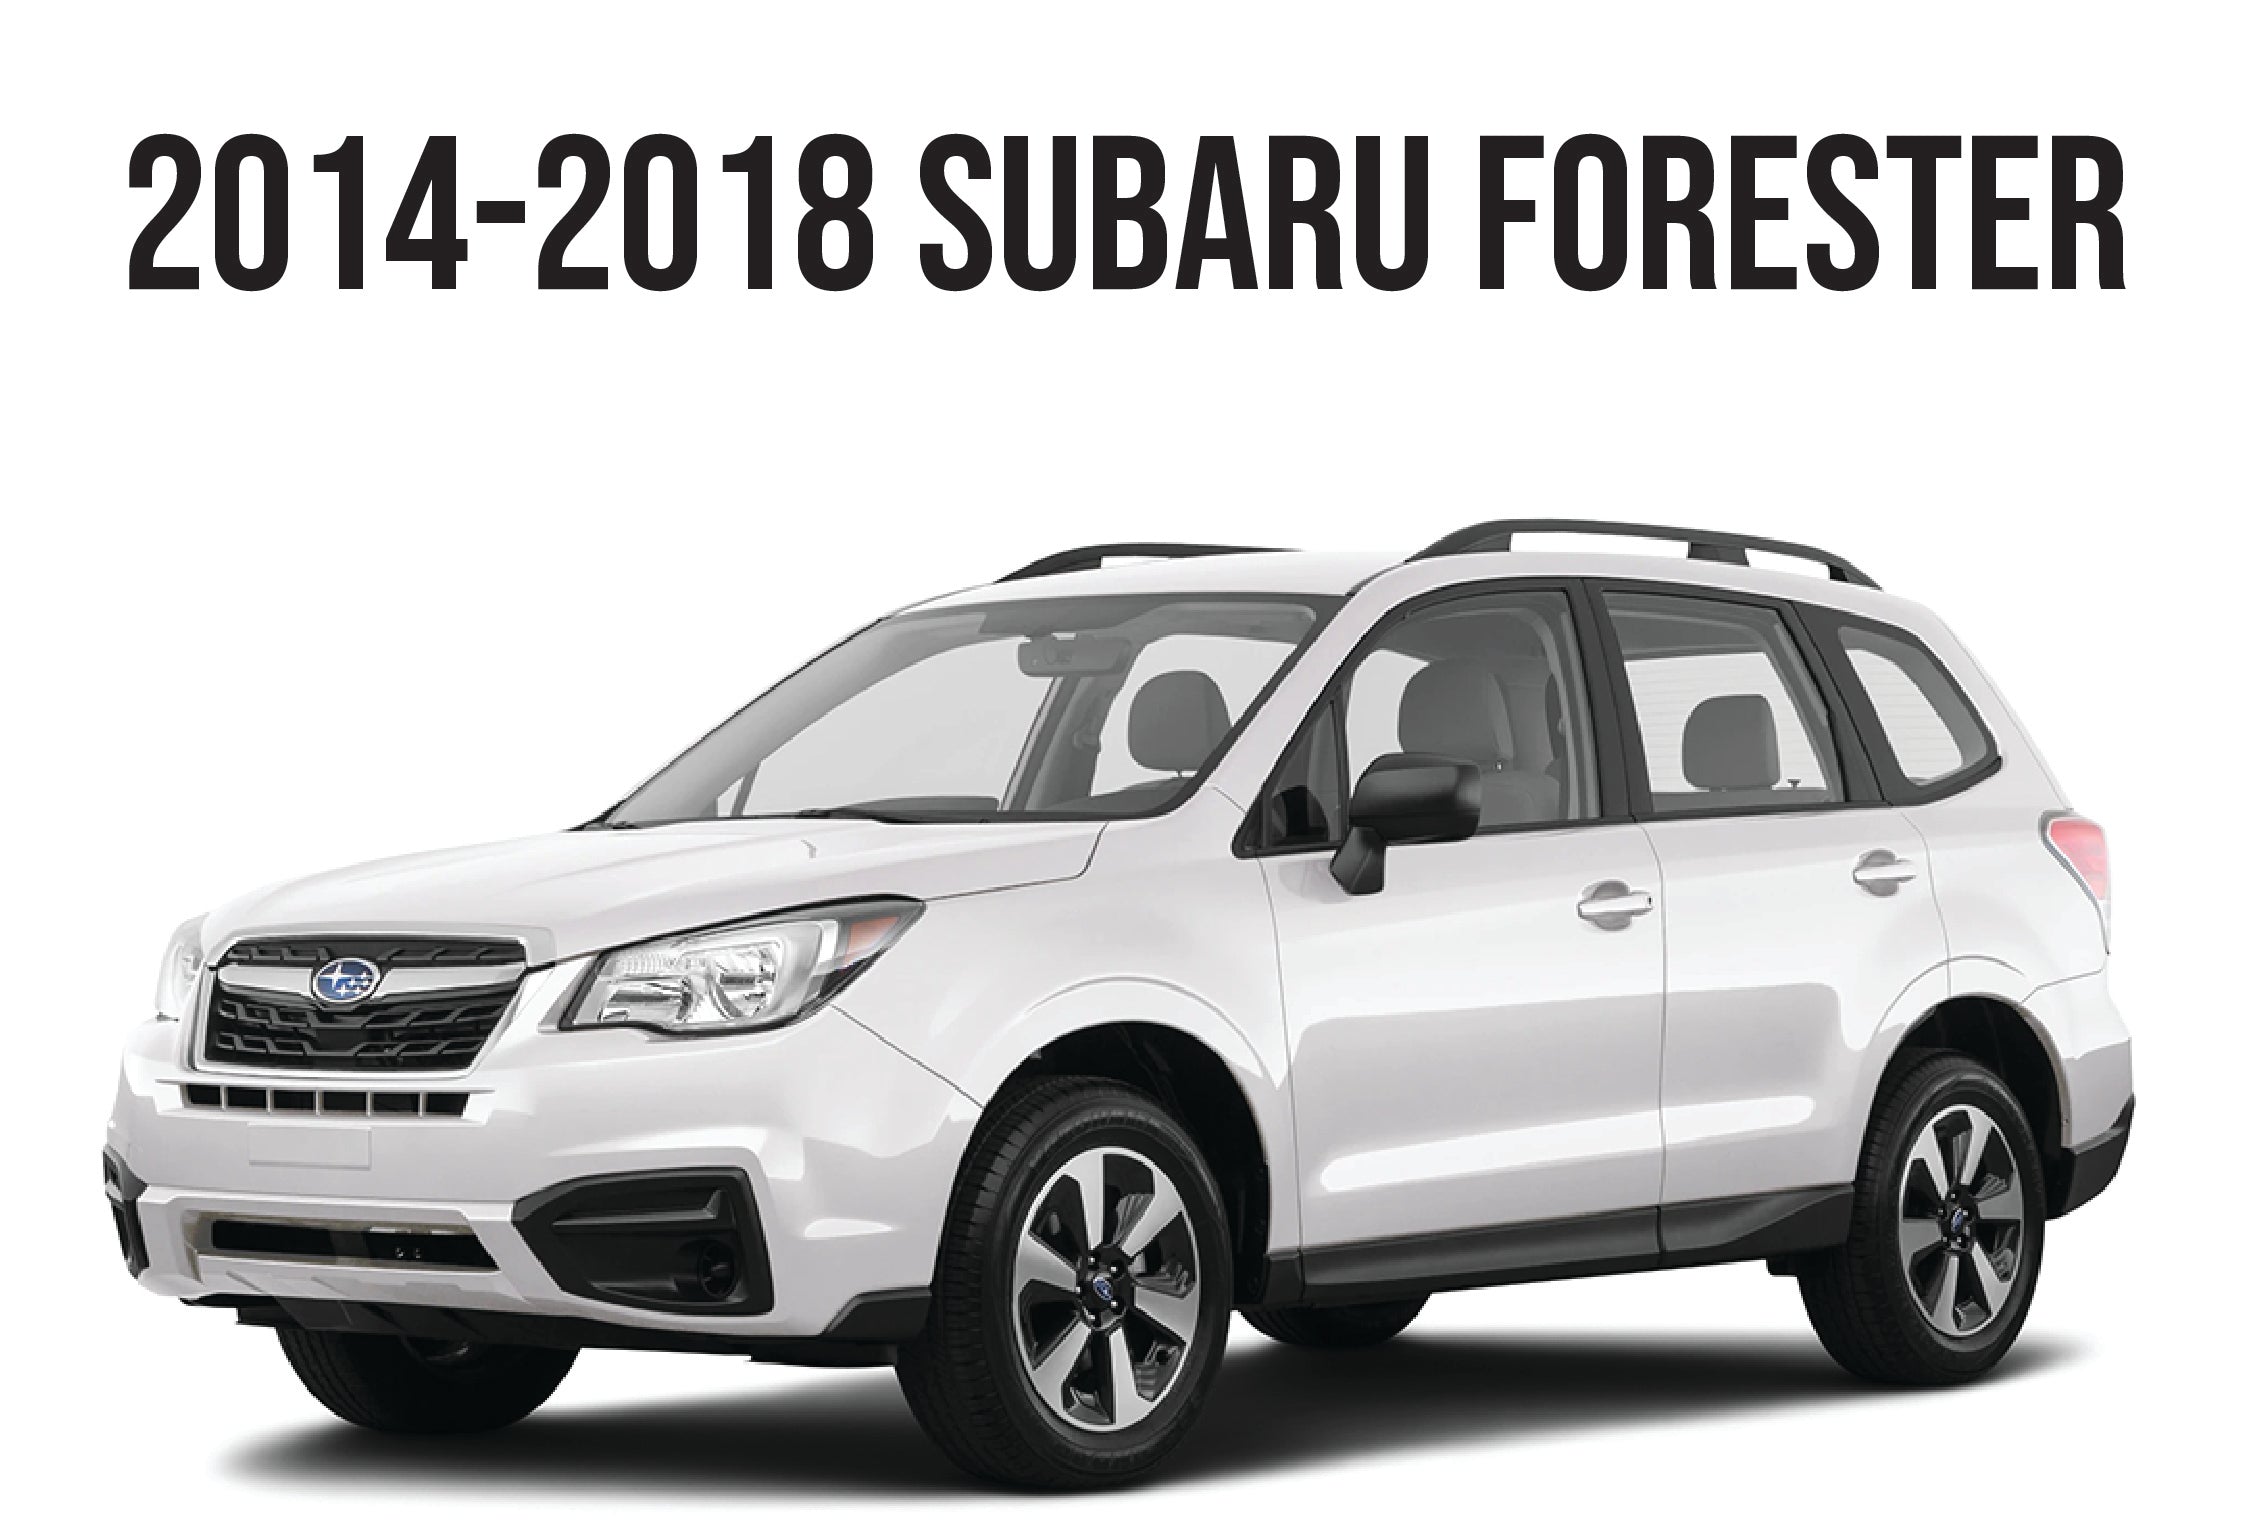 2014-2018 SUBARU FORESTER